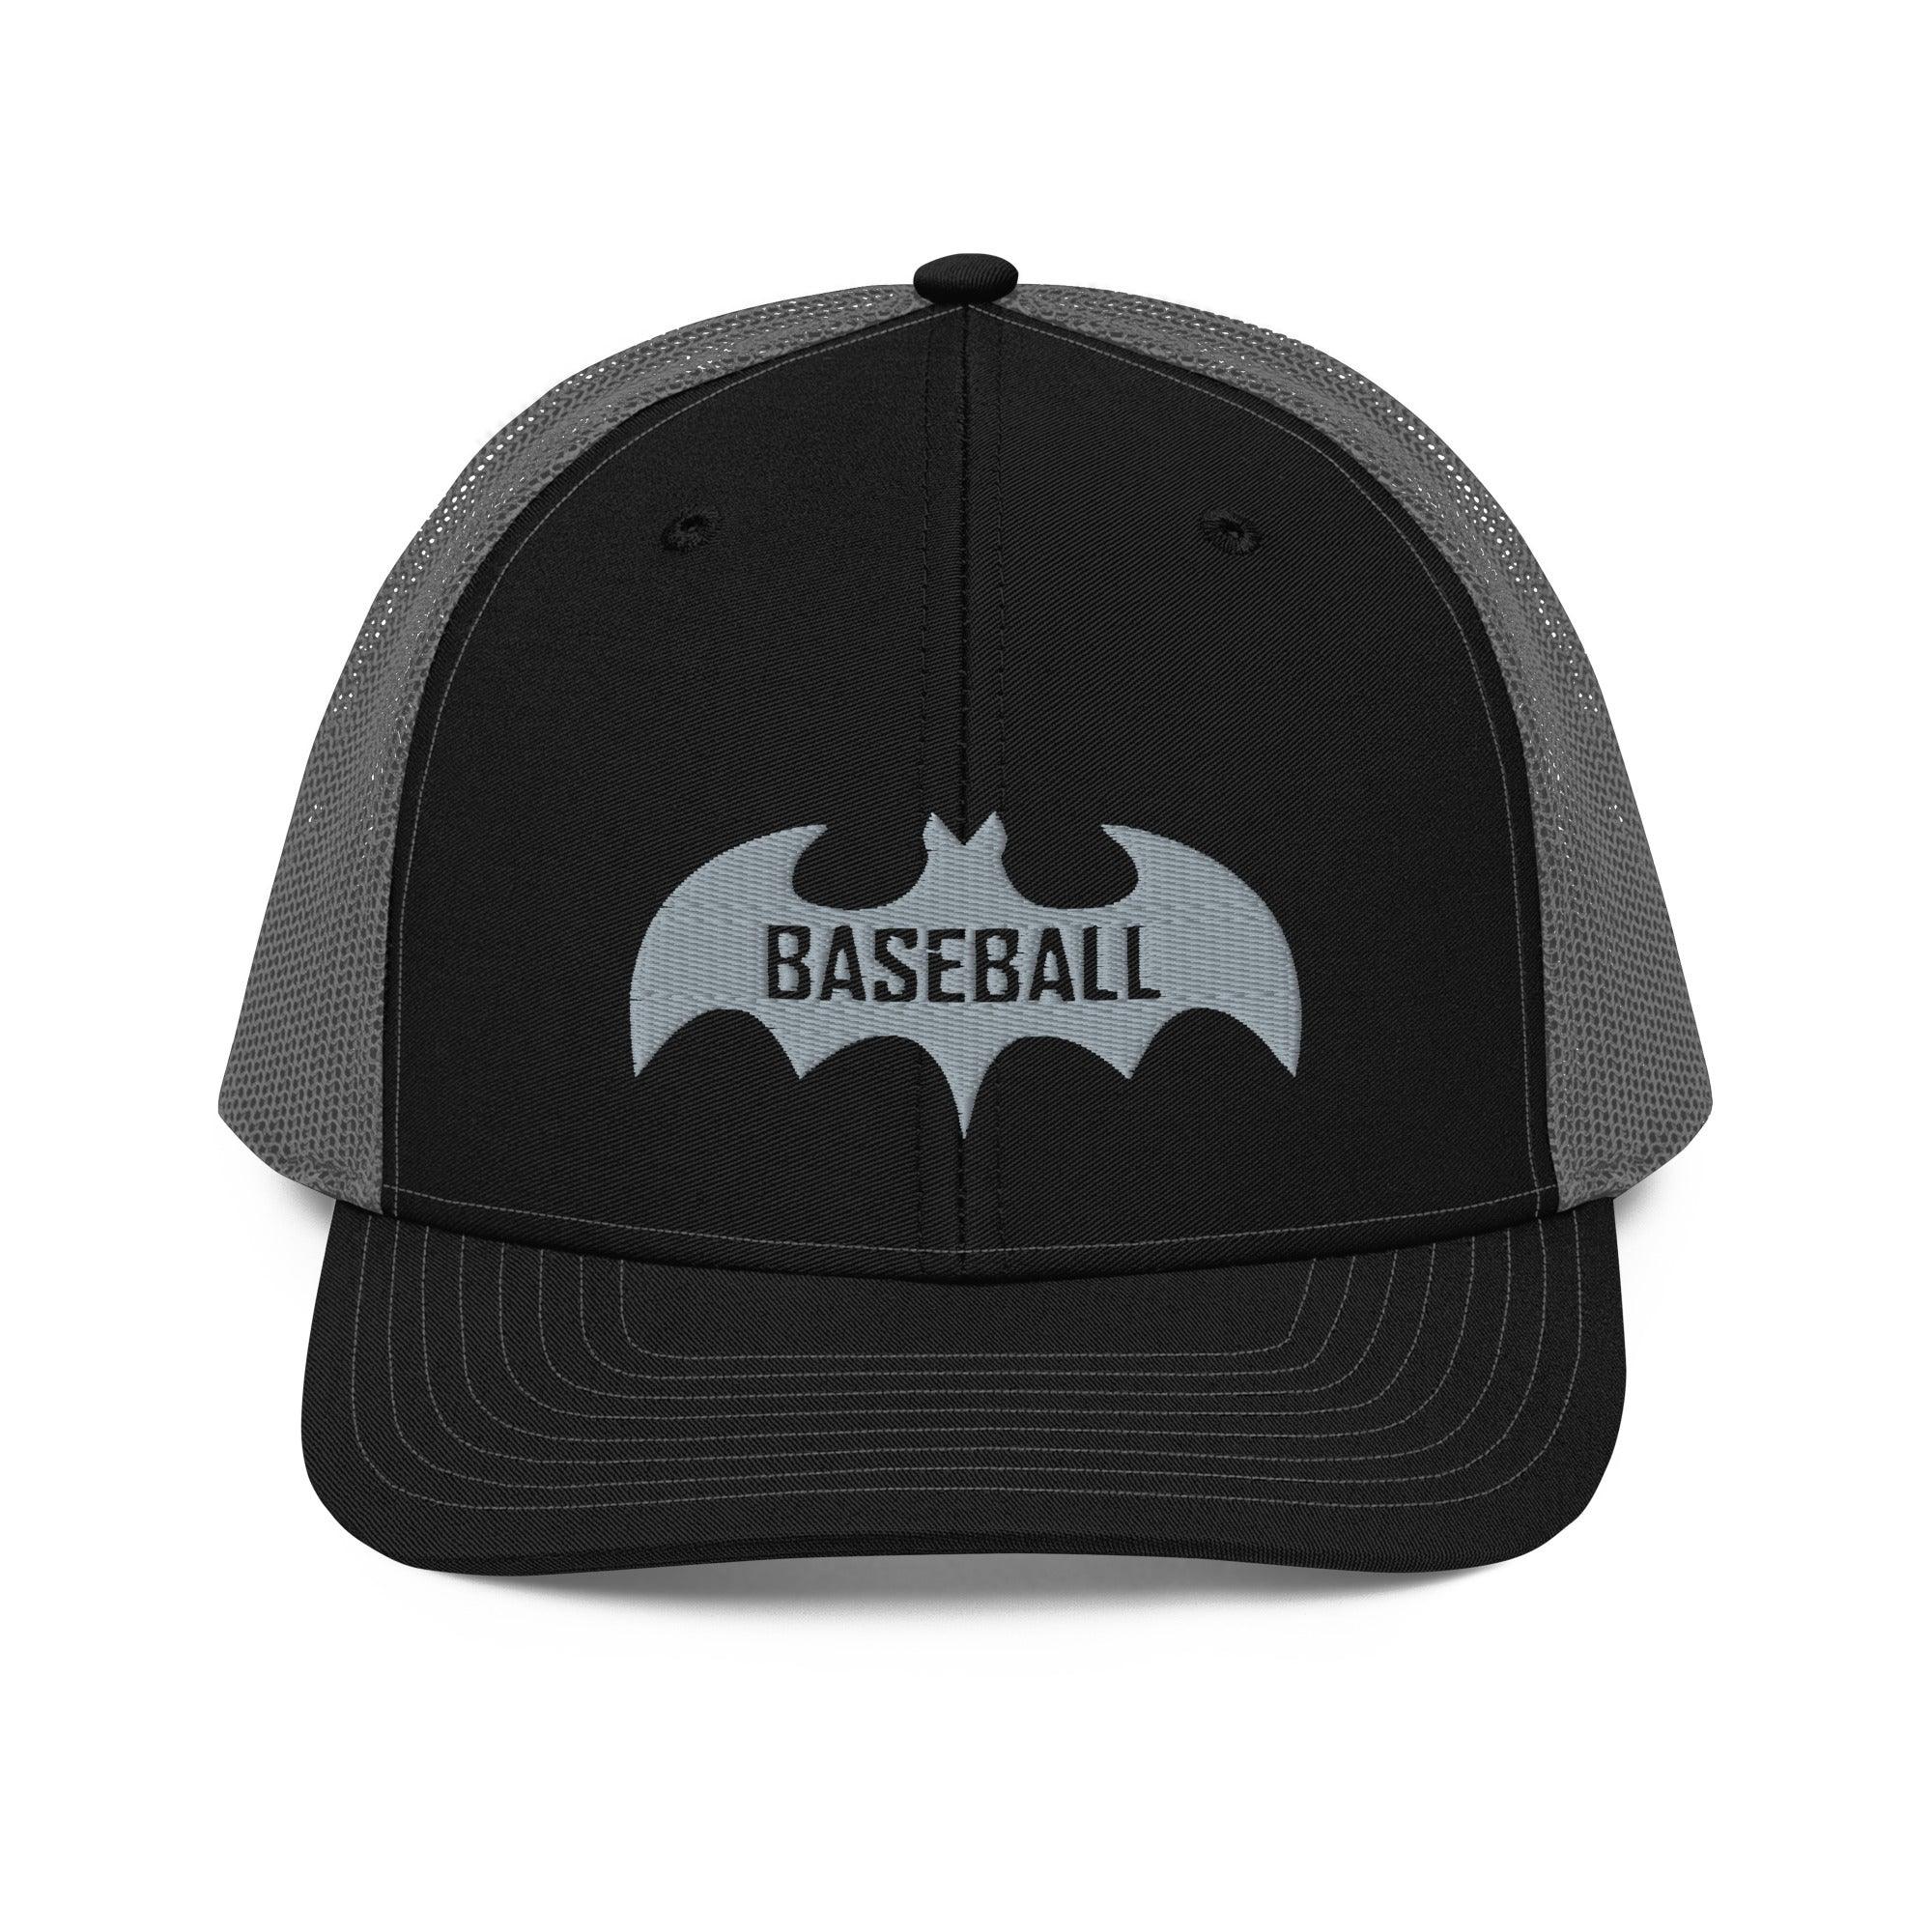 Baseball Bat Trucker Cap